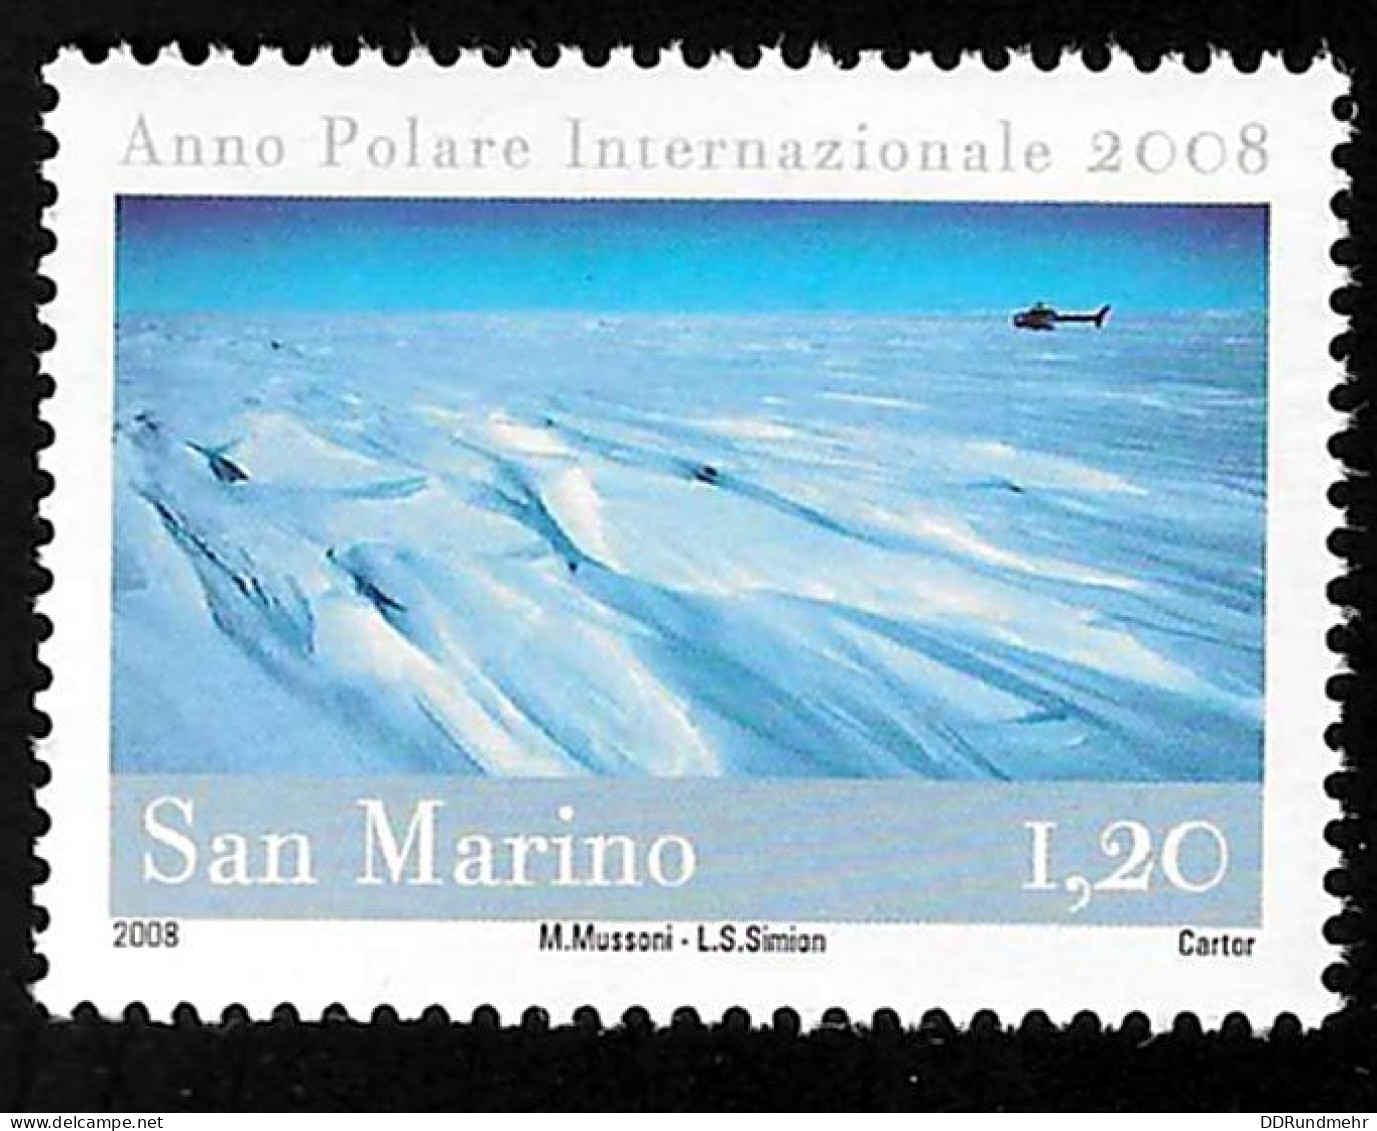 2008 Polar Year  Michel SM 2360 Stamp Number SM 1770 Yvert Et Tellier SM 2153 Stanley Gibbons SM 2186 Xx MNH - Nuevos